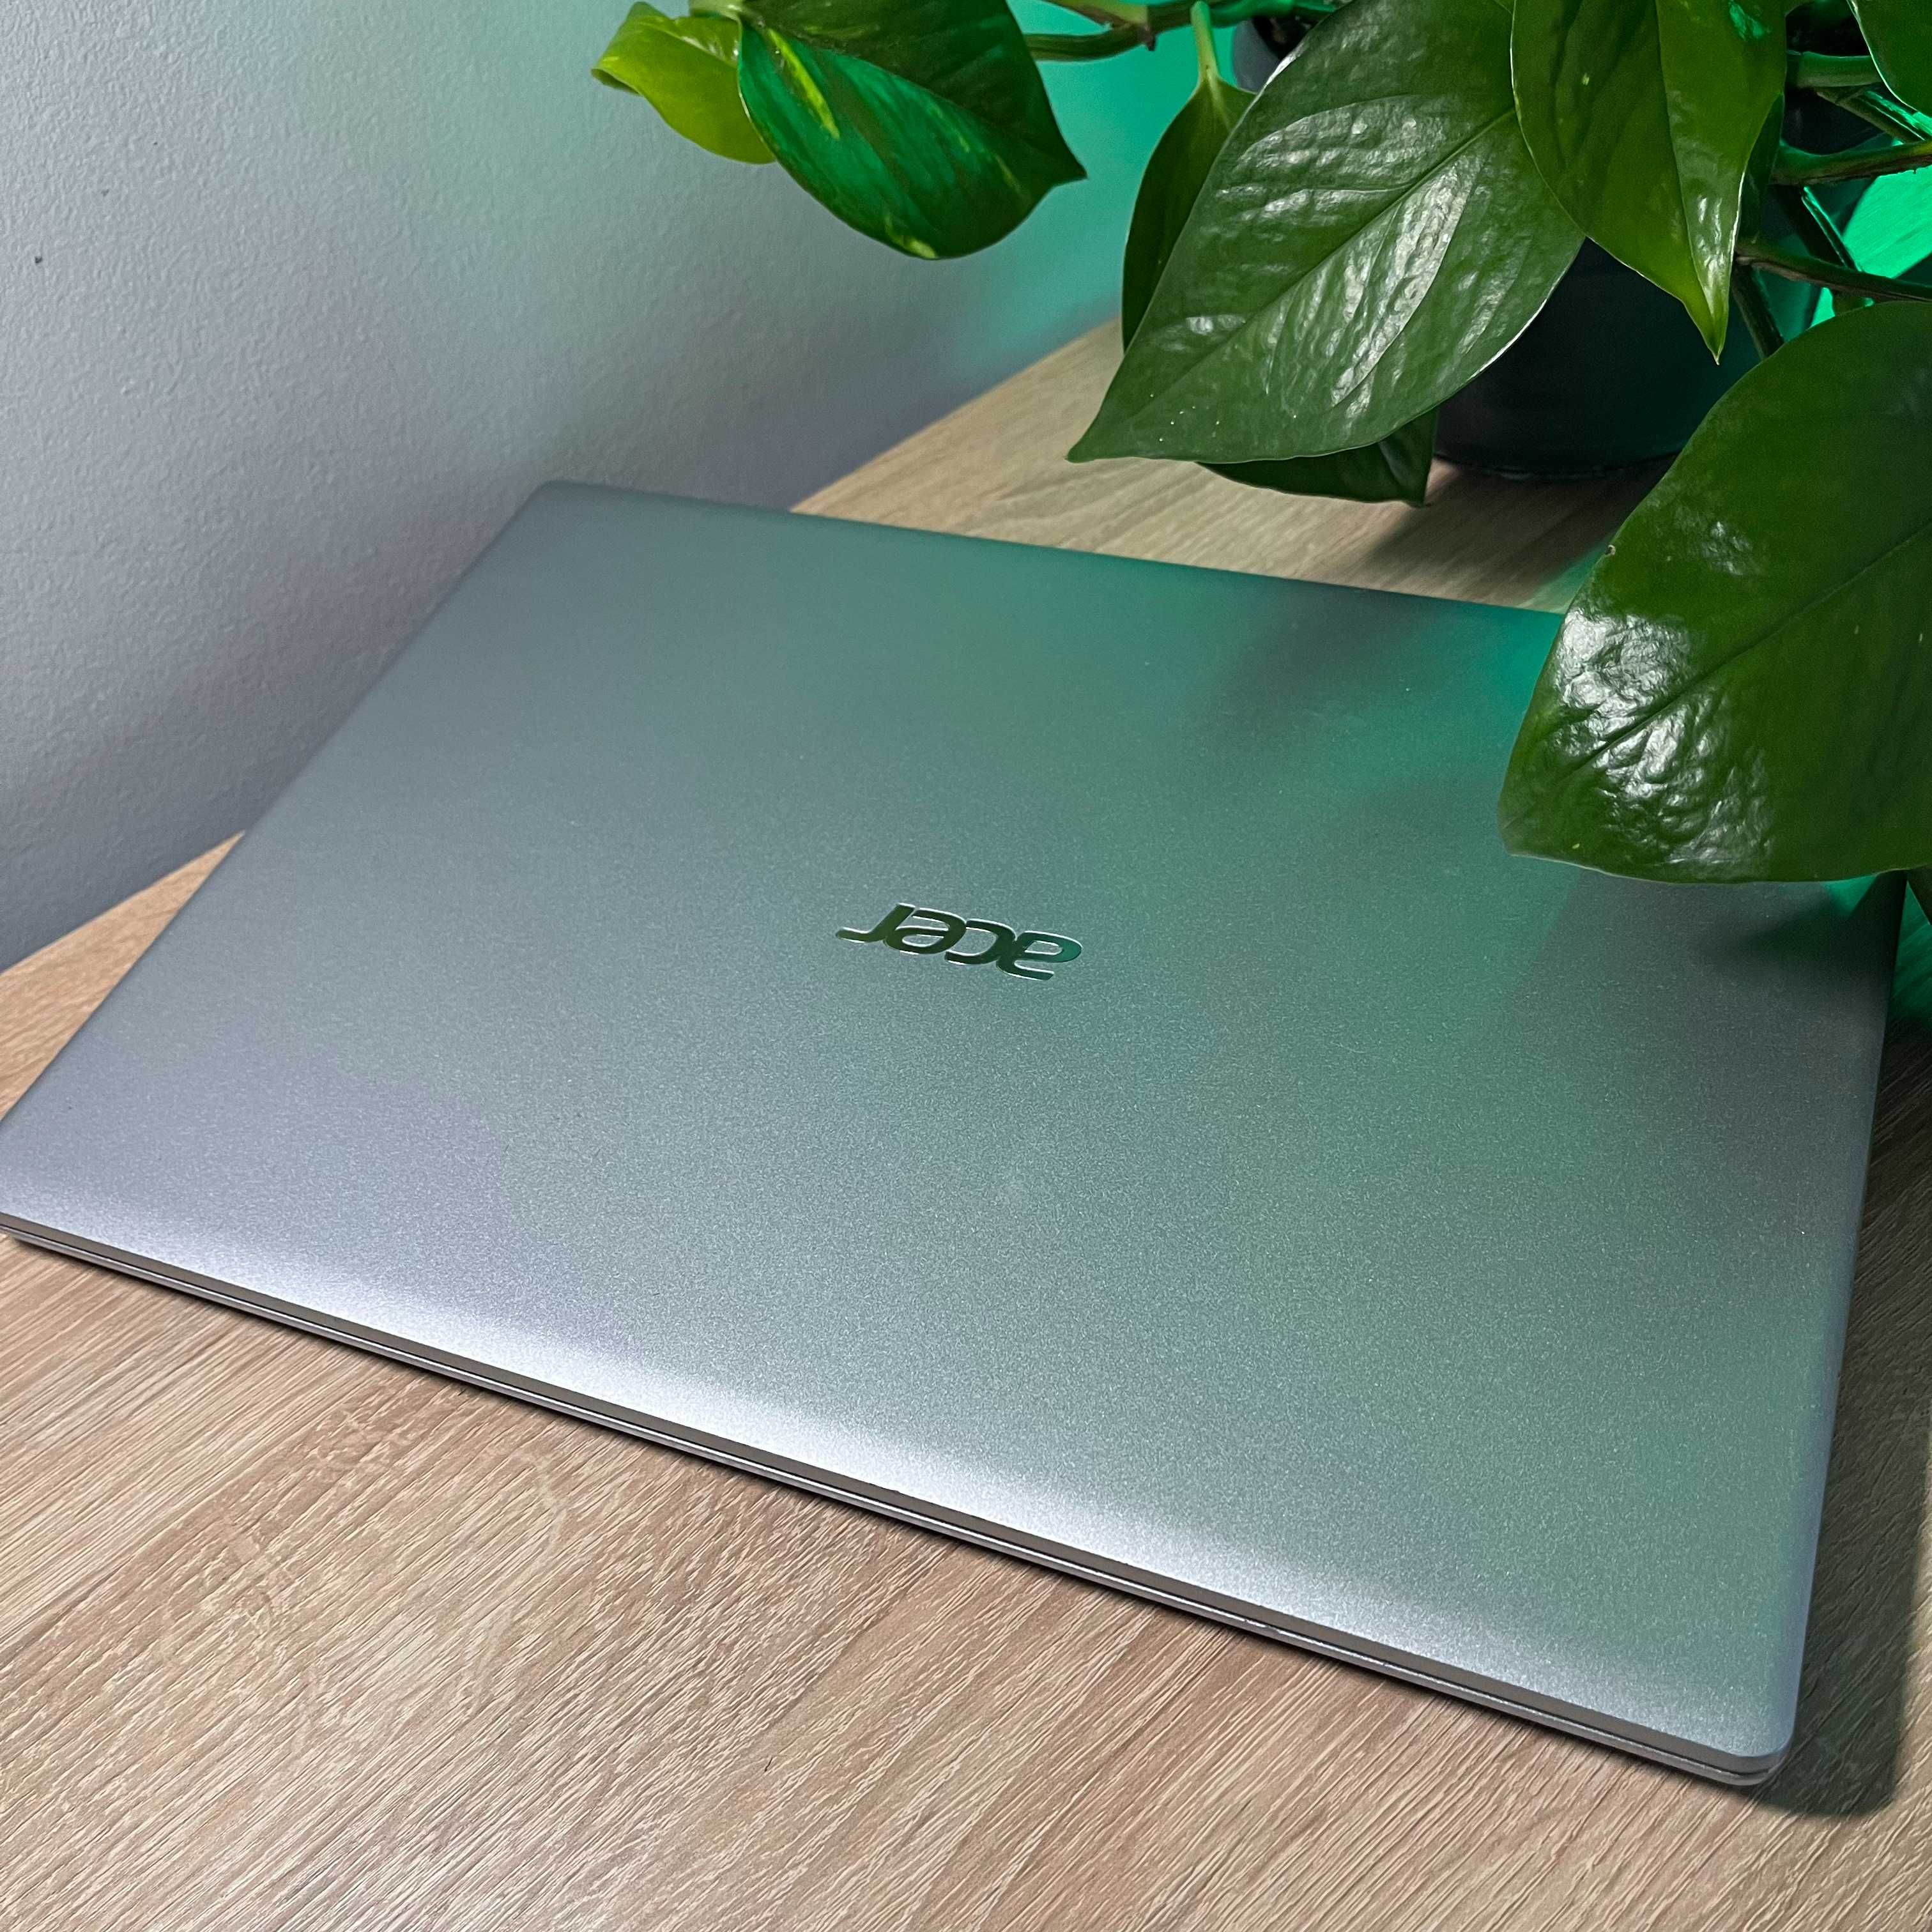 Ноутбук Acer aspire 3, Intel pentium 4/128